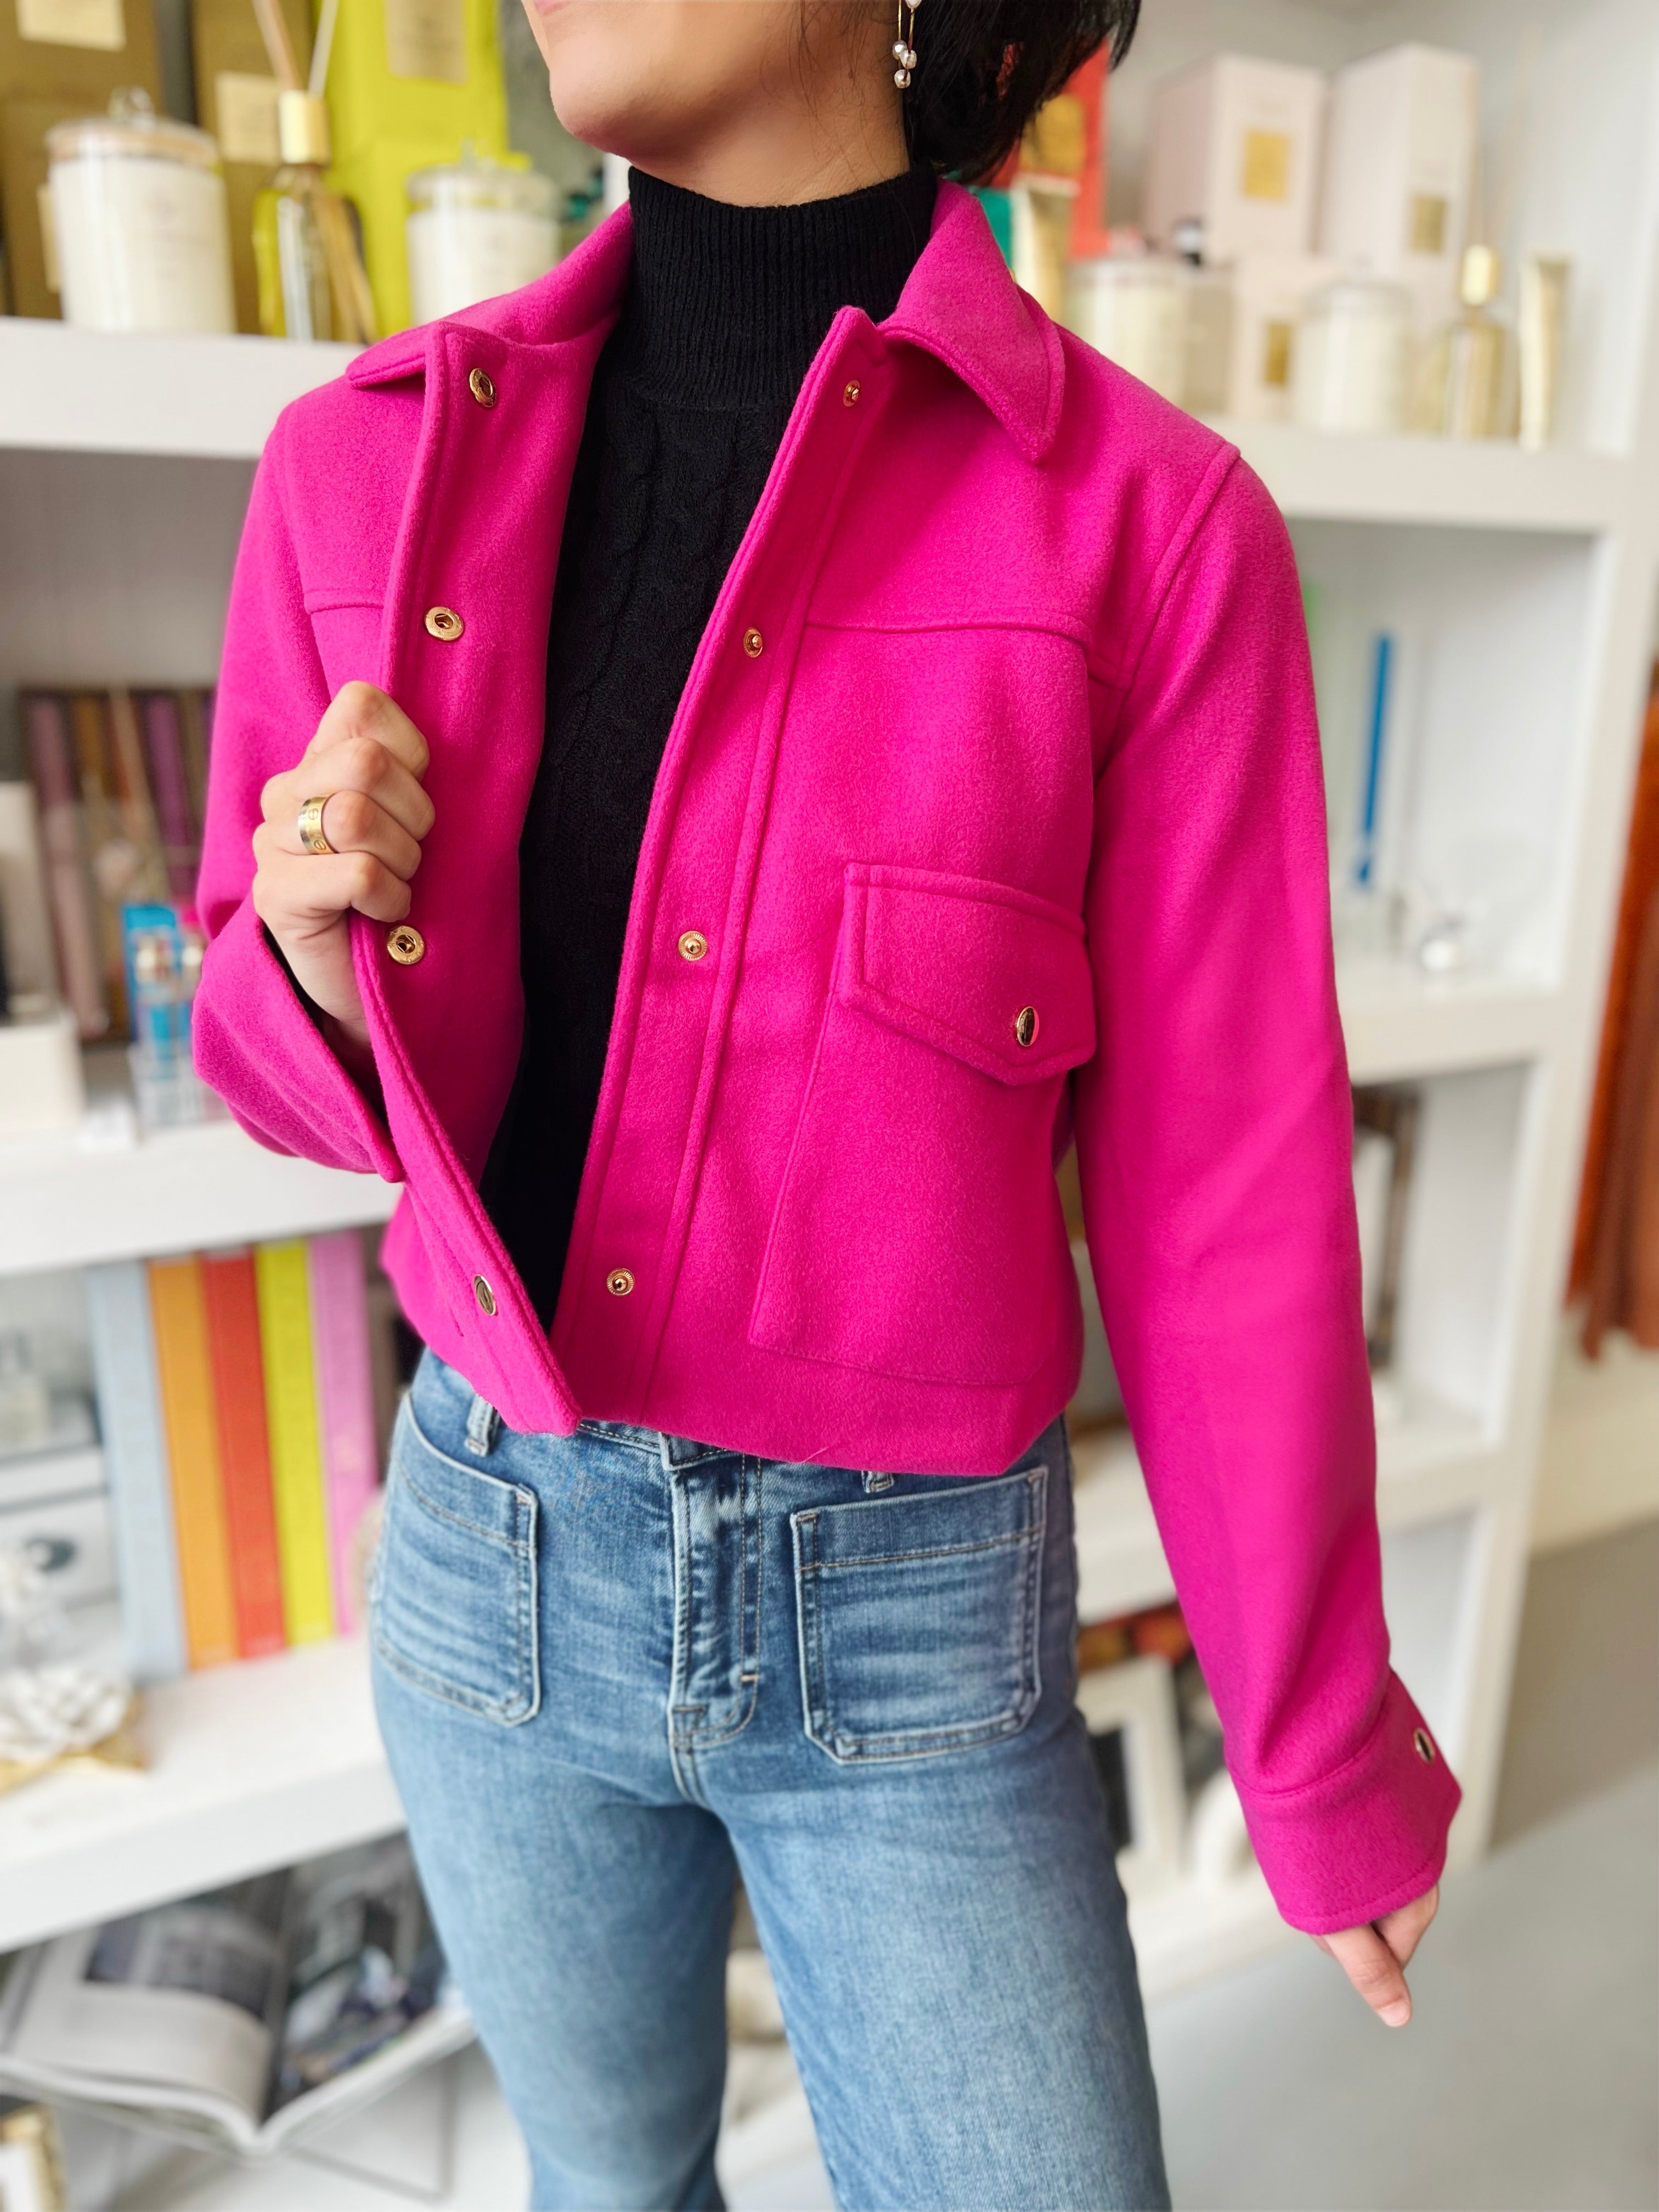 Hot Pink Fur Coat | Pink fur coat, Hot pink fur coat, Fur coats women